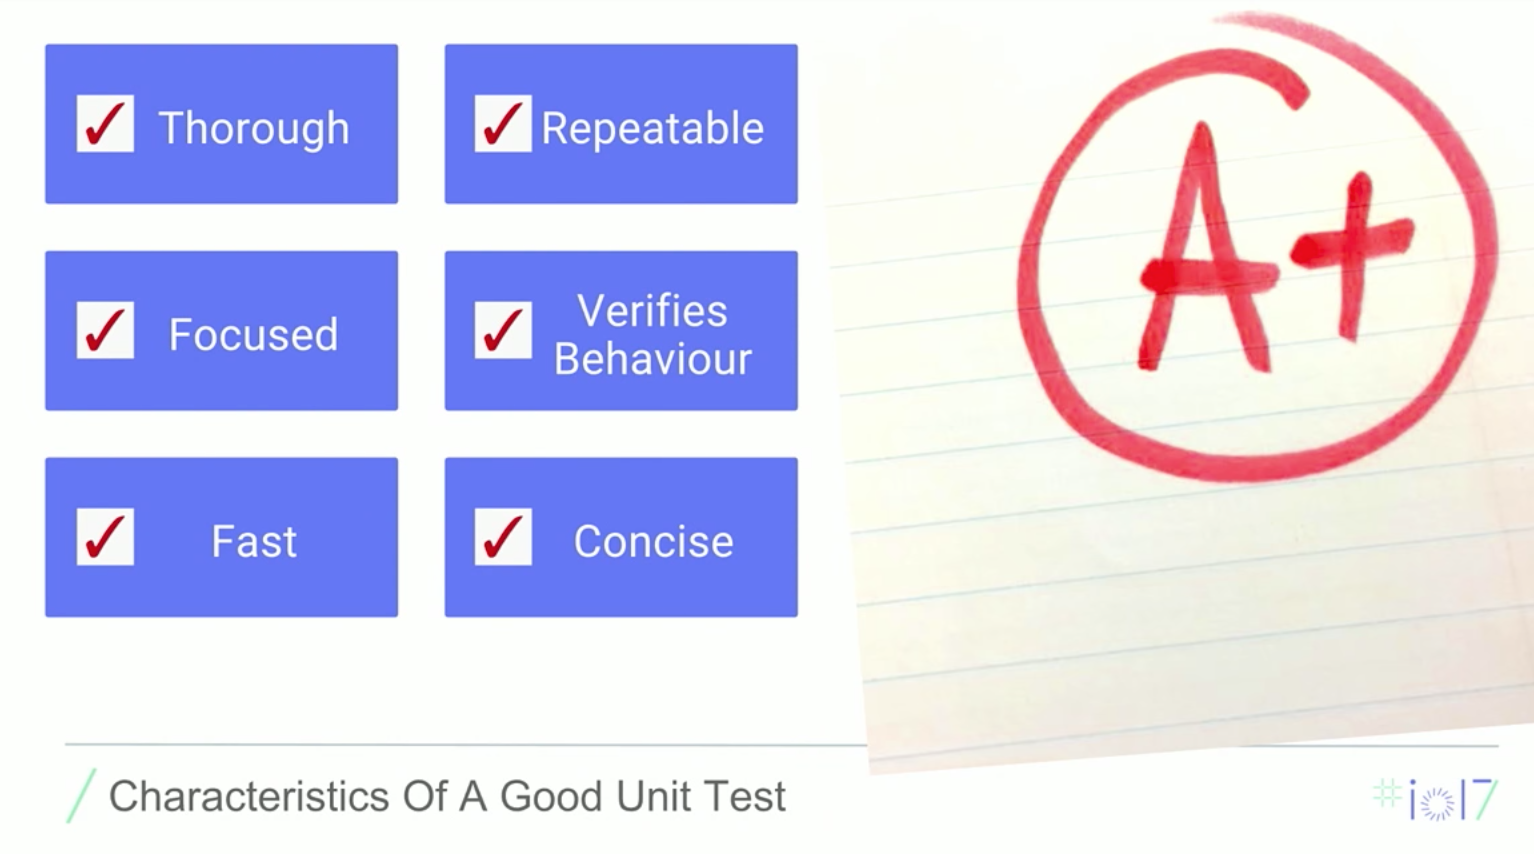 Good Unit Tests